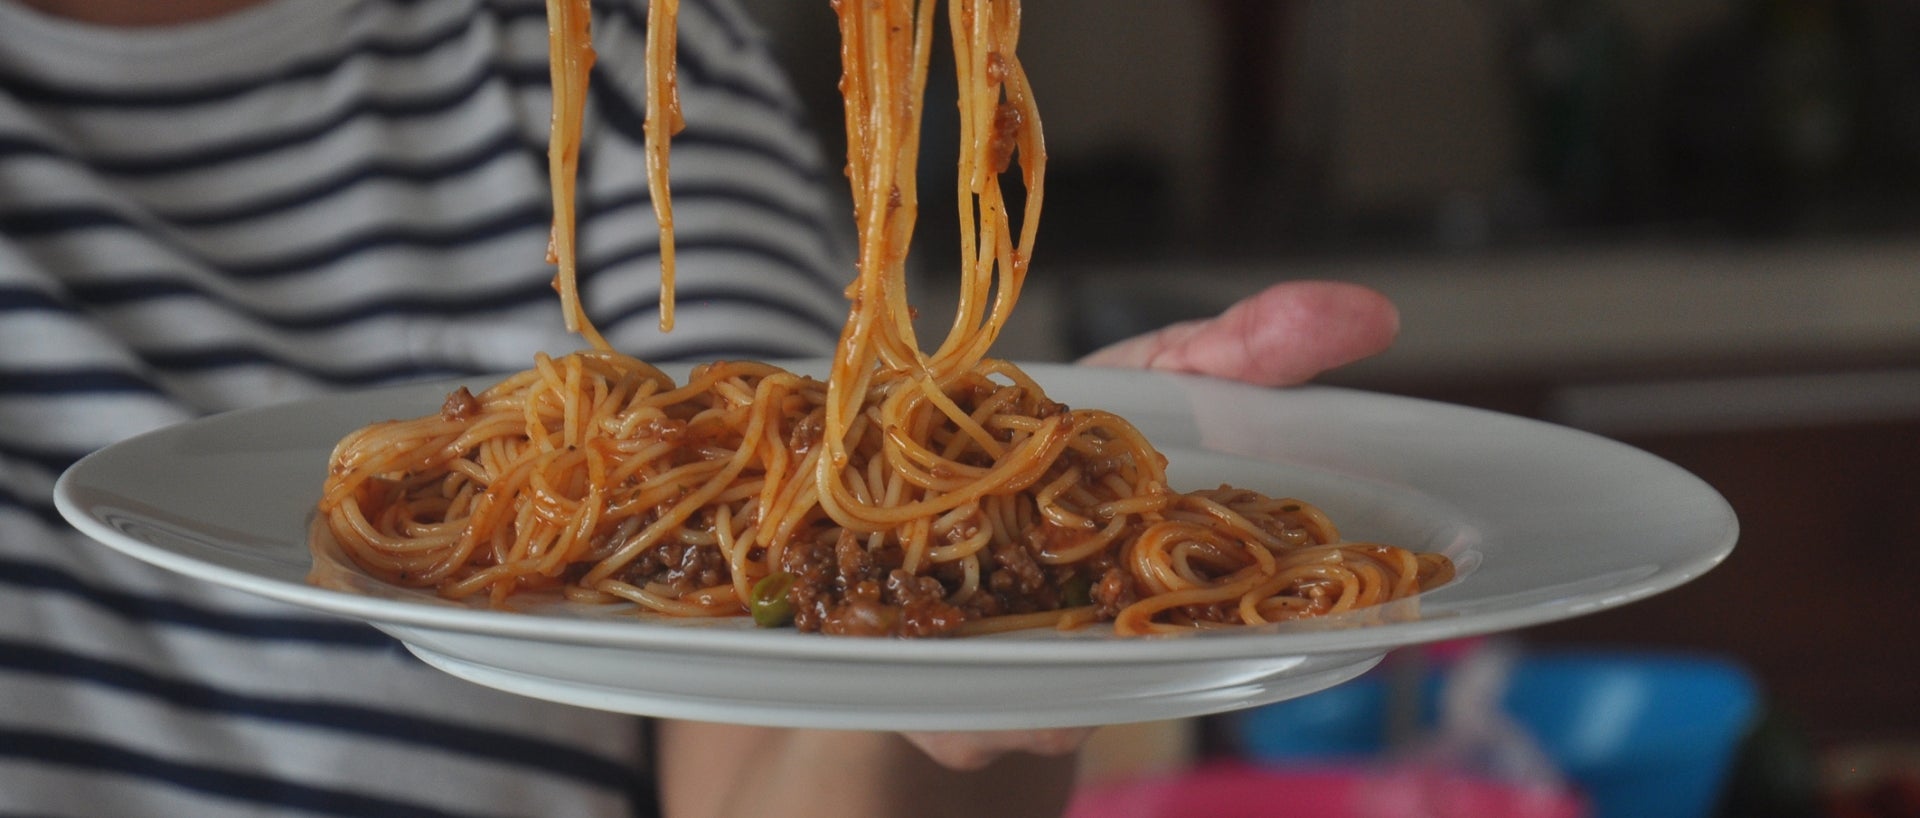 Plate of spaghetti